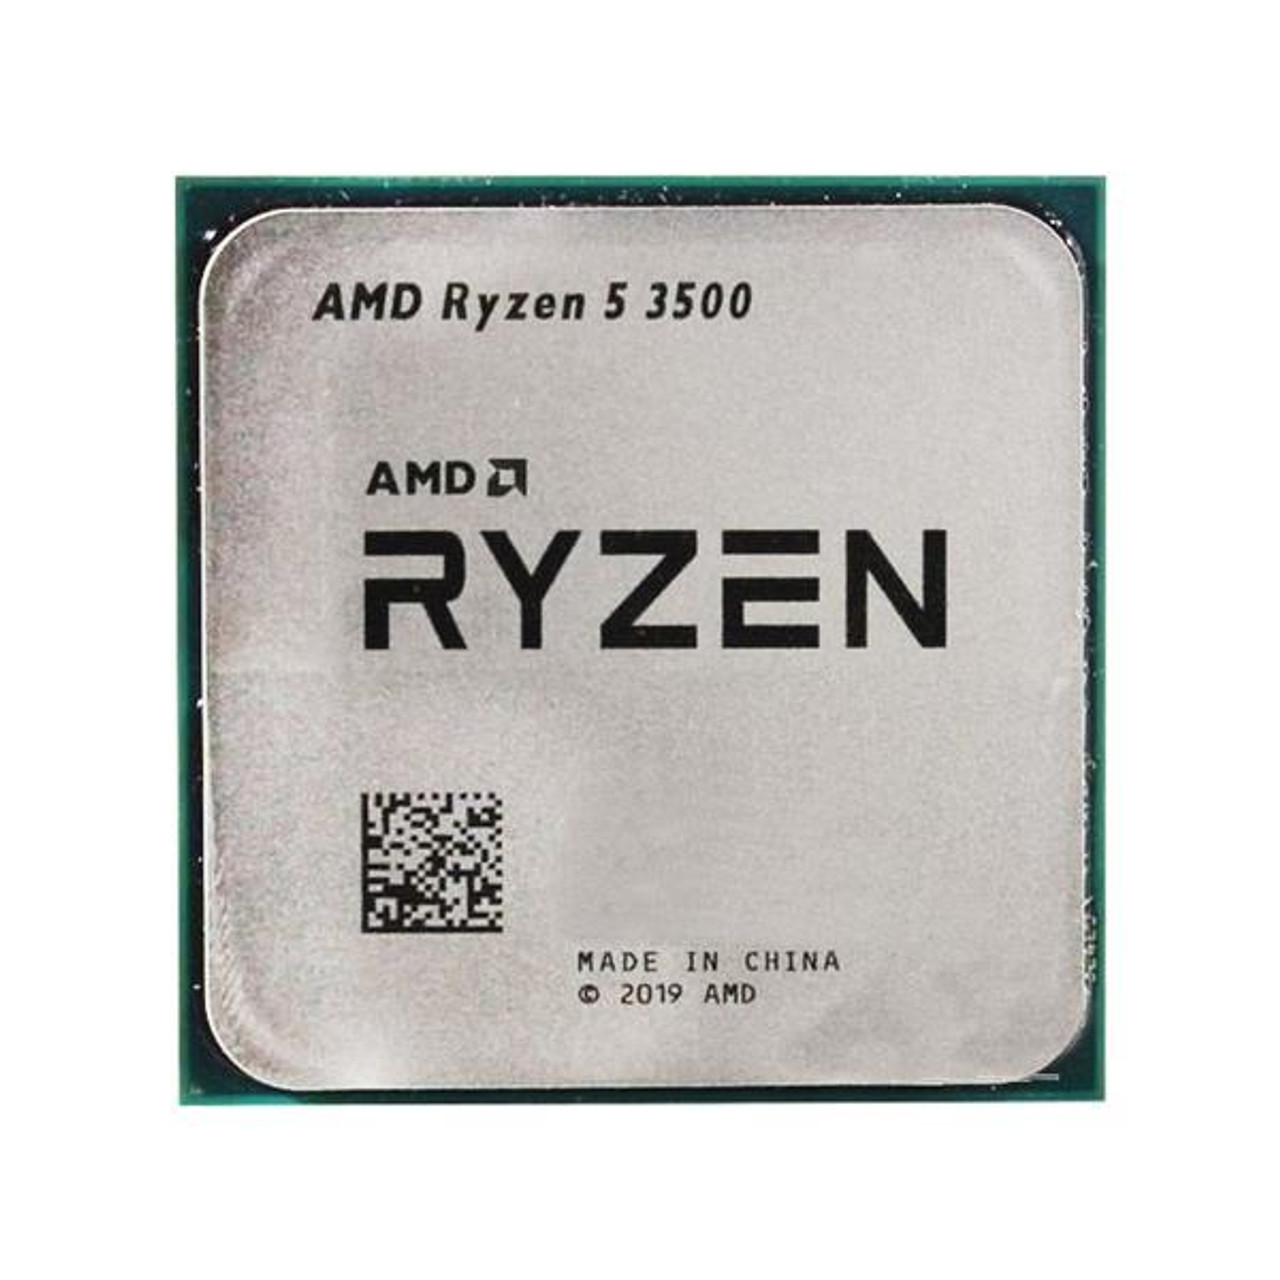 AMD Ryzen 5 3500 6-Core 3.60GHz 16MB L3 Cache Socket AM4 Processor